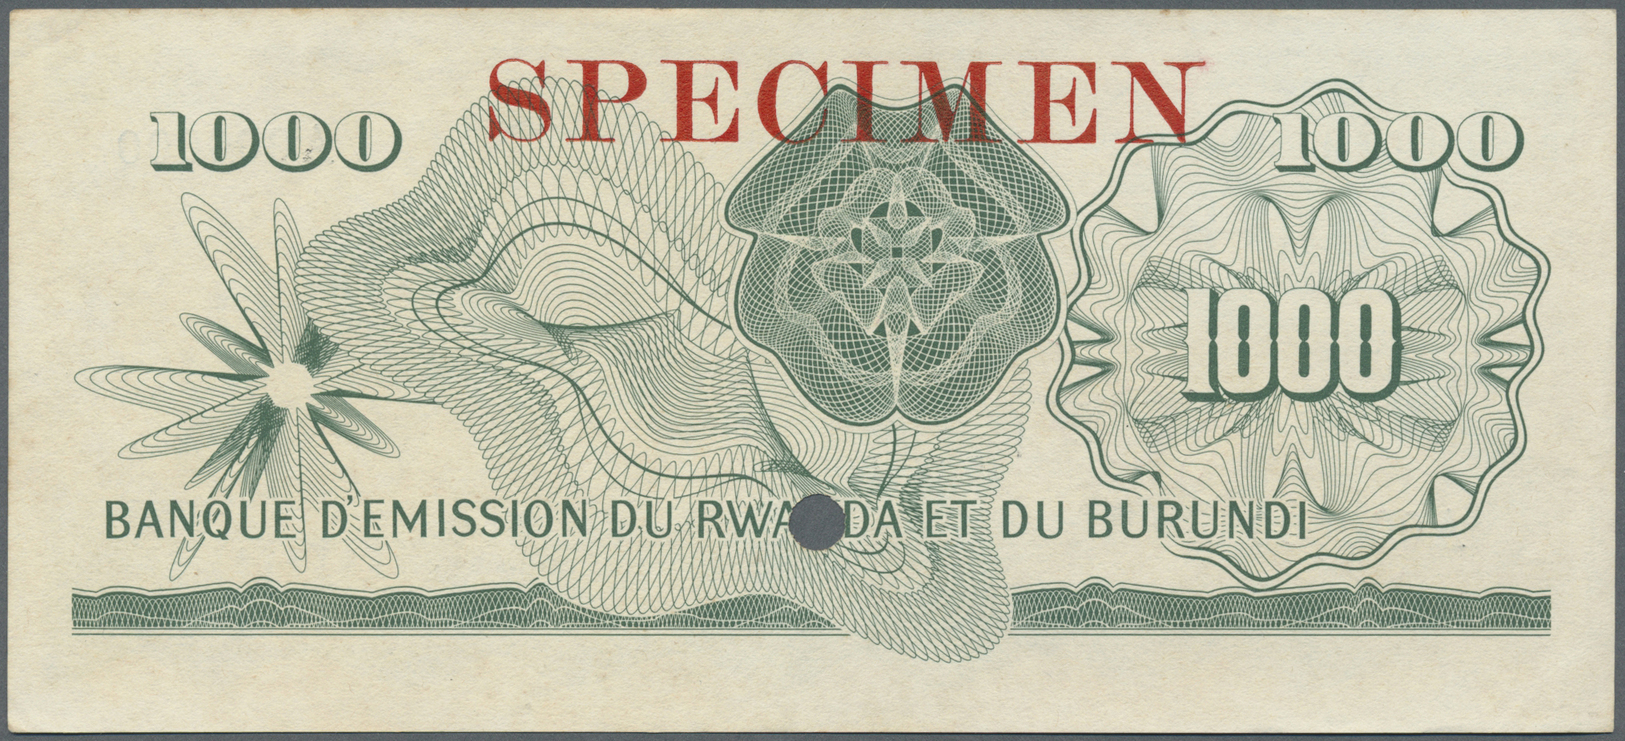 02834 Rwanda-Burundi / Ruanda-Burundi: 1000 Francs 1960 Specimen P. 7s, With Cancellation Hole And Red Specimen Overprin - Ruanda-Urundi